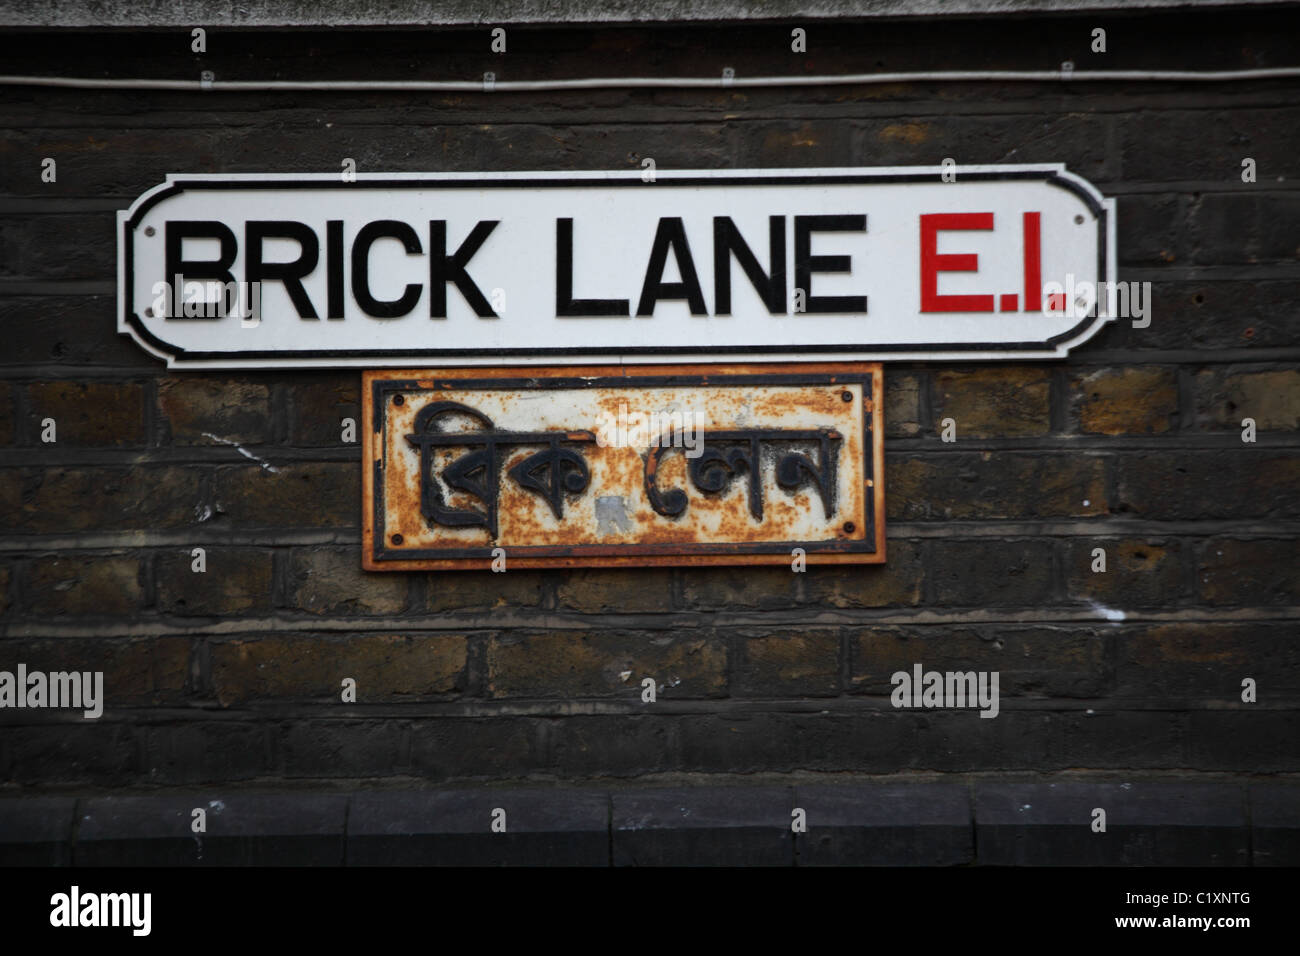 street sign in bricklane london Stock Photo